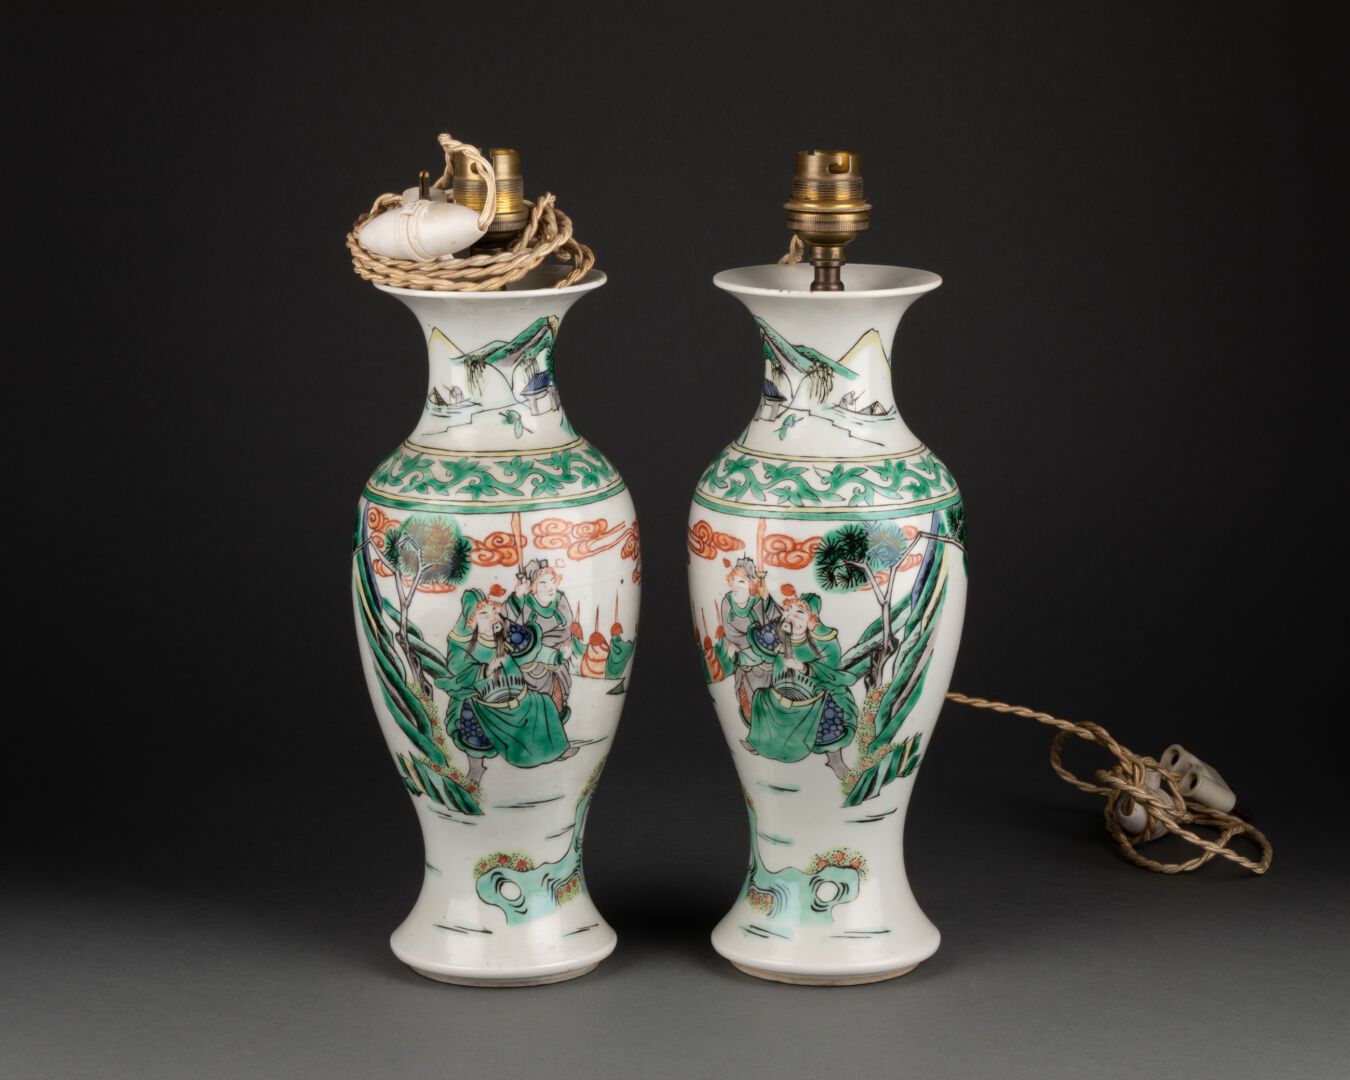 CHINE - Vers 1900 饰有政要场景的一对柱形花瓶

绿色家族的瓷器和珐琅器

H.26厘米

安装成灯